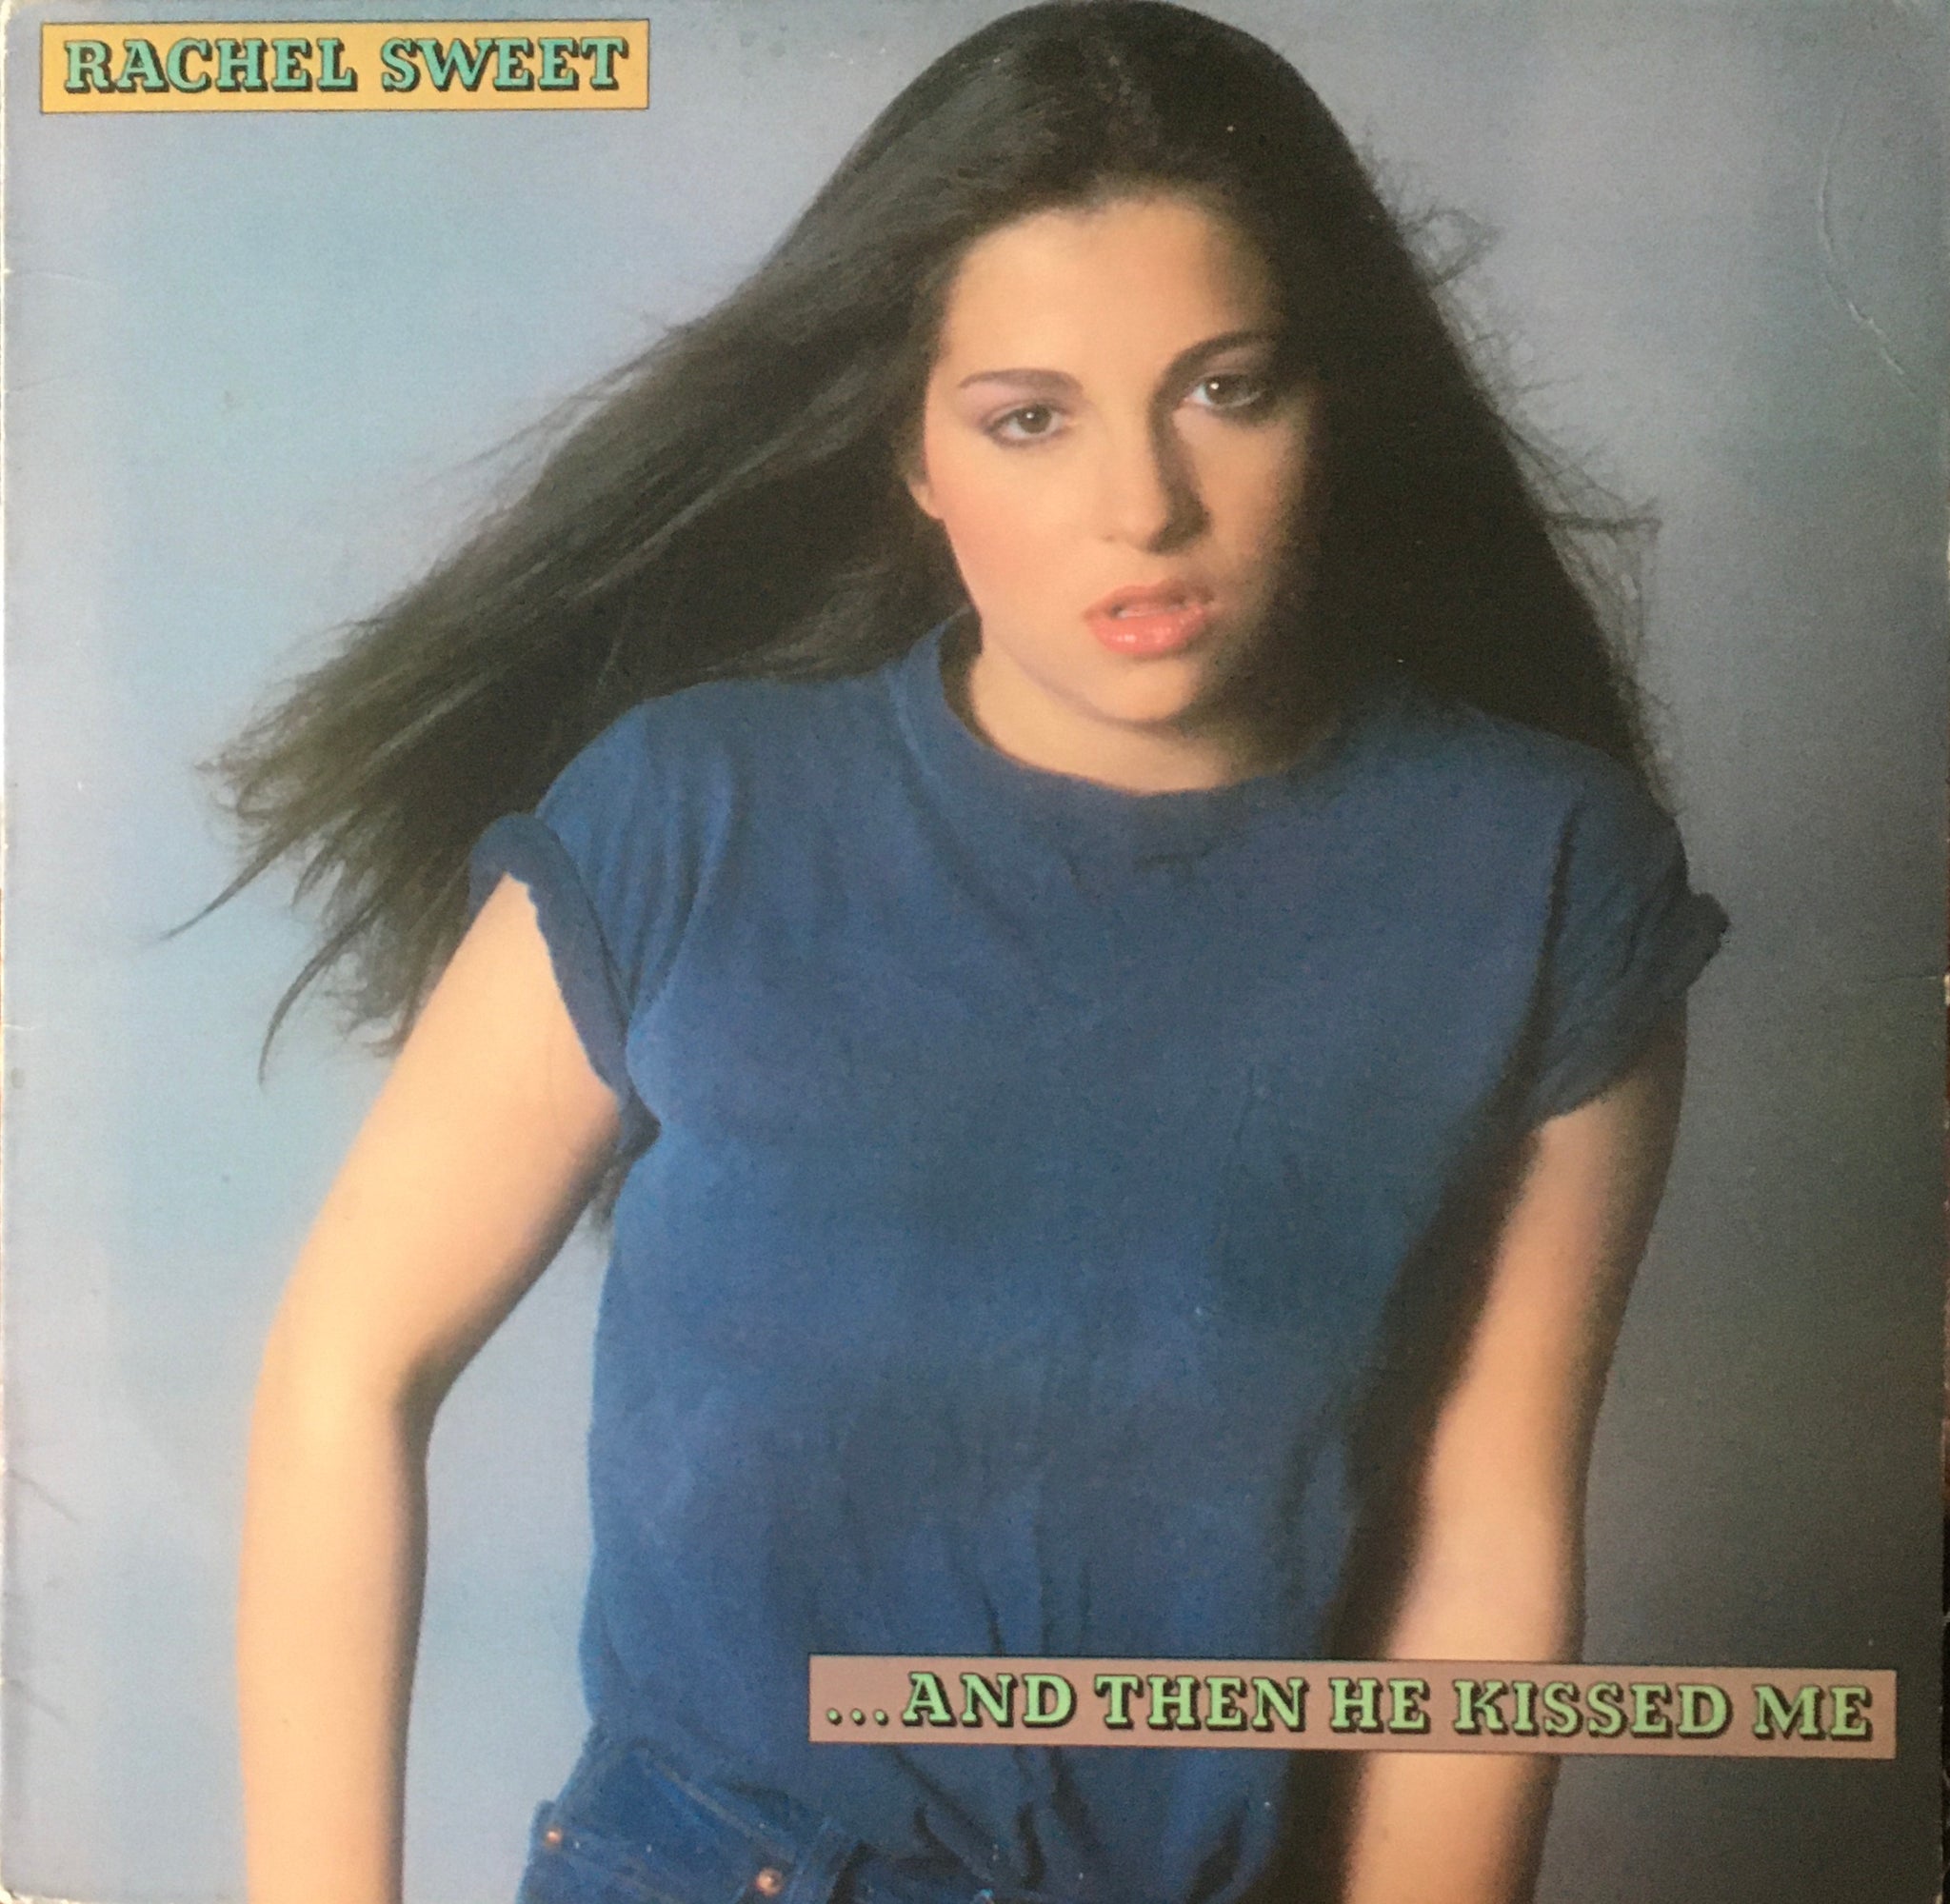 Rachel Sweet "...And Then He Kissed Me" LP (1981)